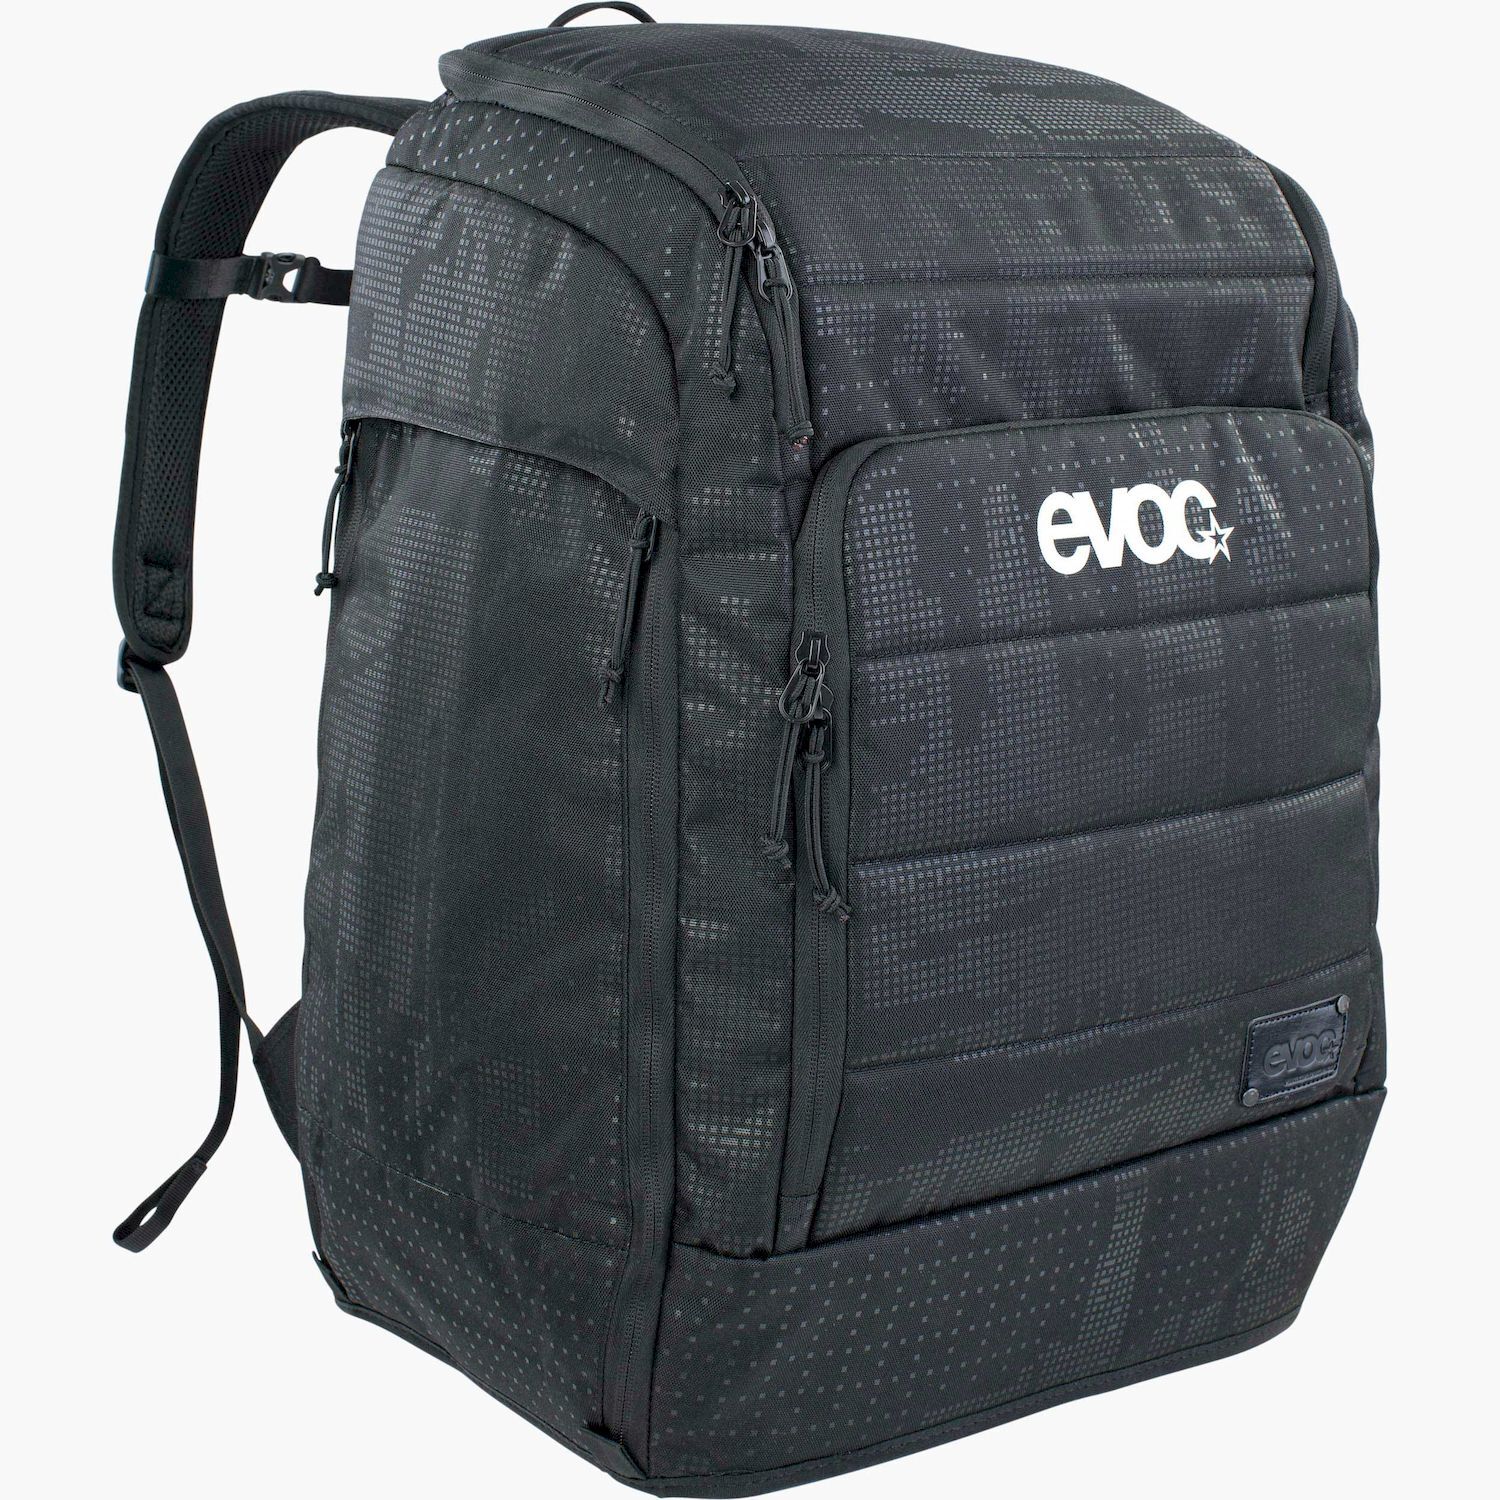 Evoc Gear Backpack 60 - Sacca portascarponi